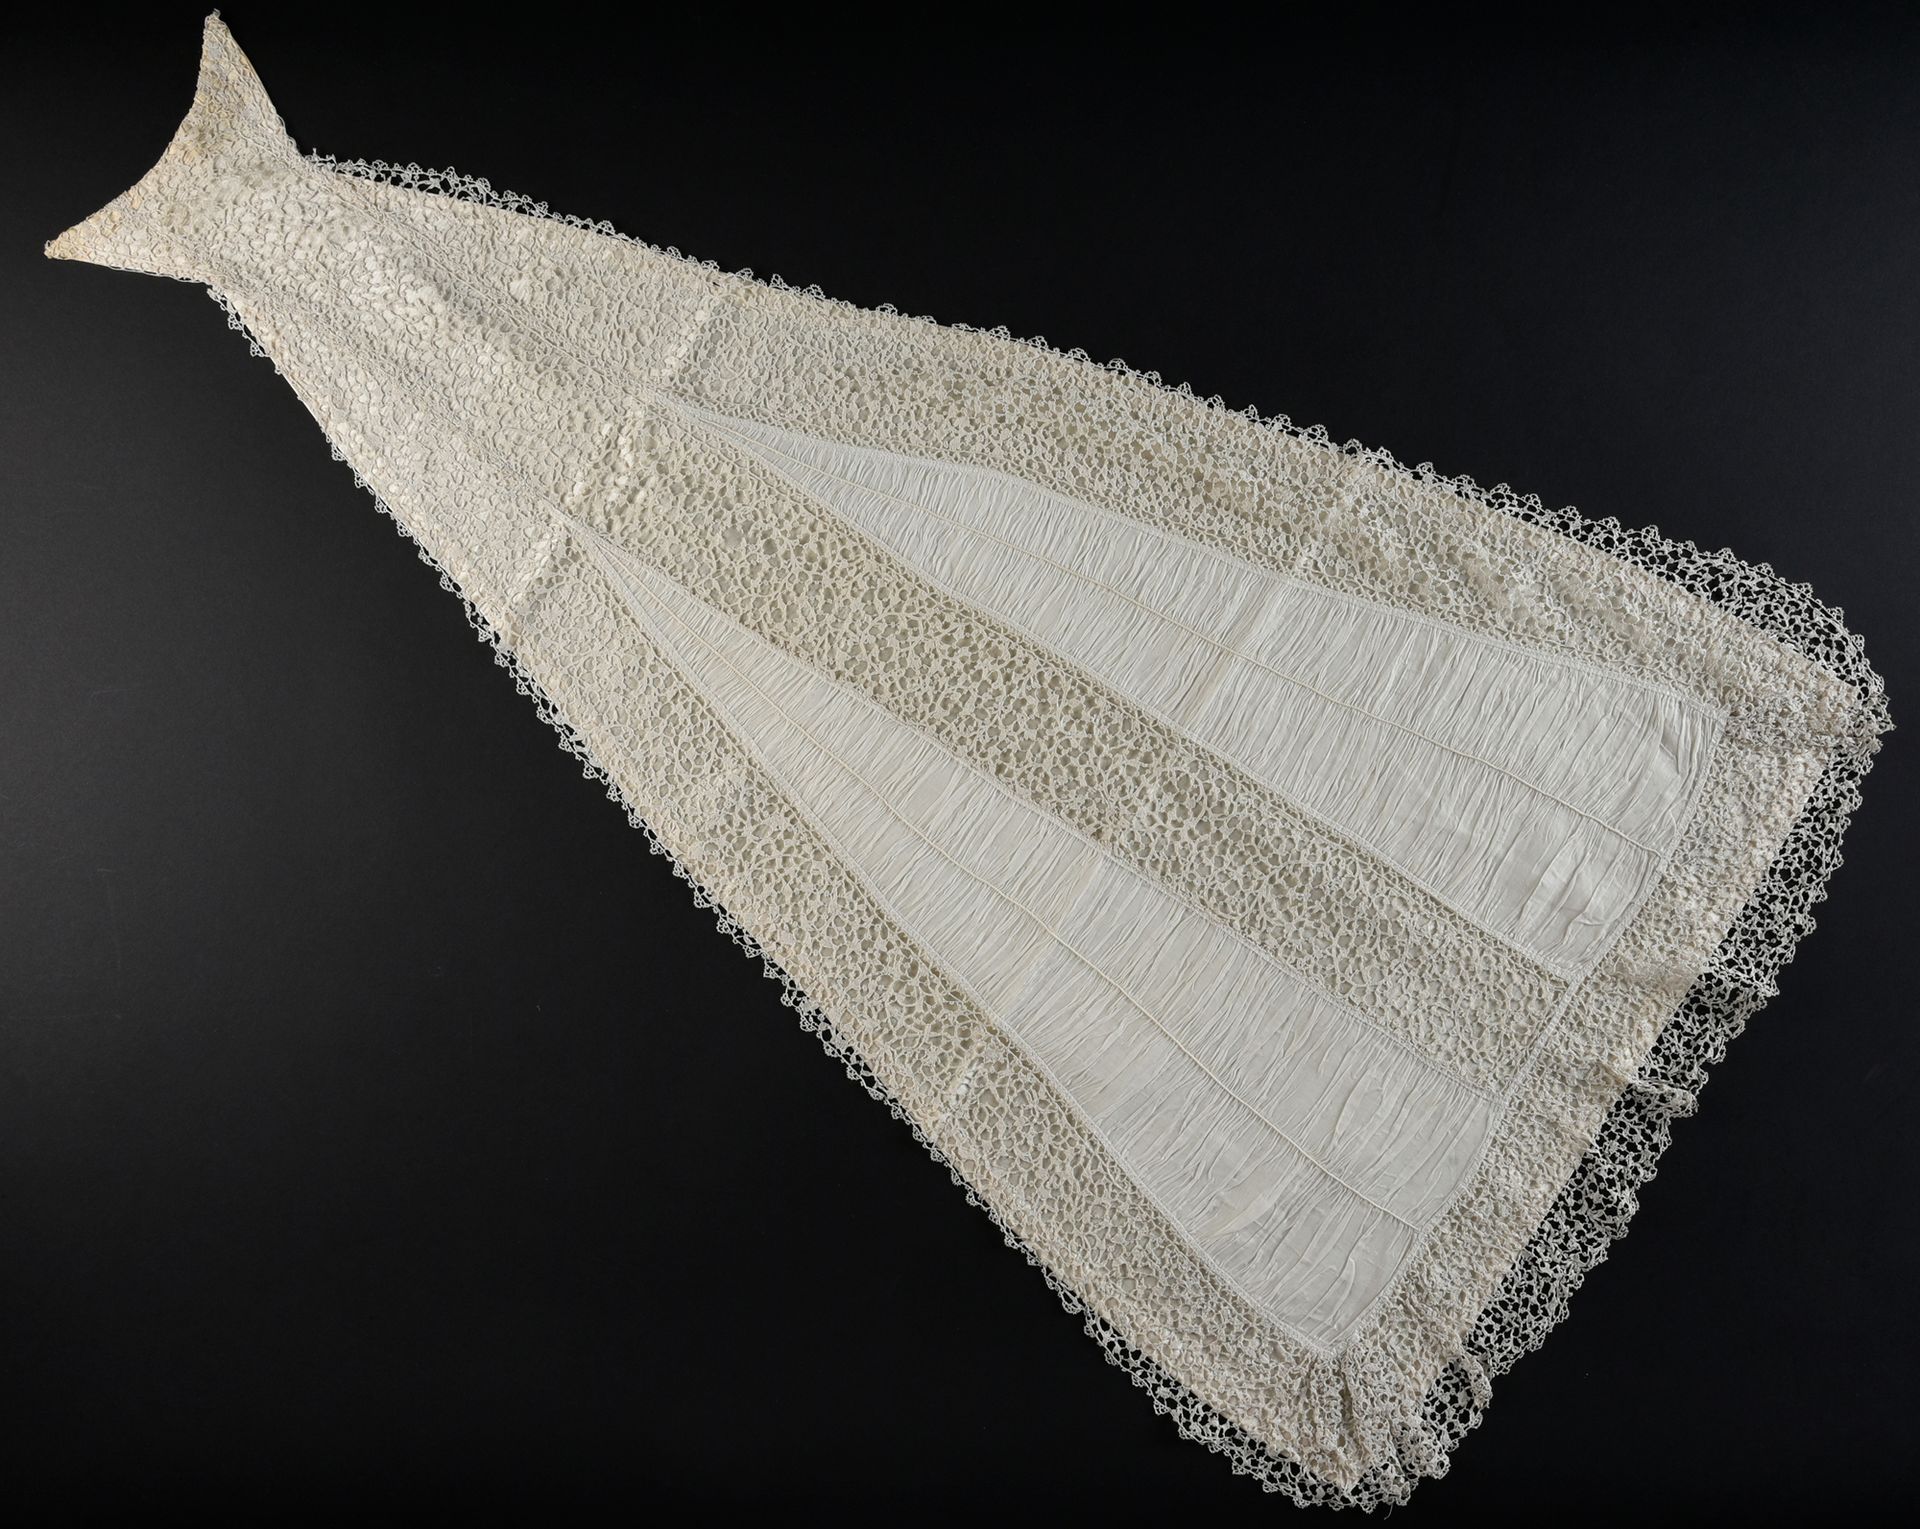 Null 科拉林，针状花边，意大利，17世纪末。

新生儿展示围裙在19世纪重新制作，结构上有聚集的亚麻布条和细针花边''Coraline''的褶皱，可追溯到1&hellip;